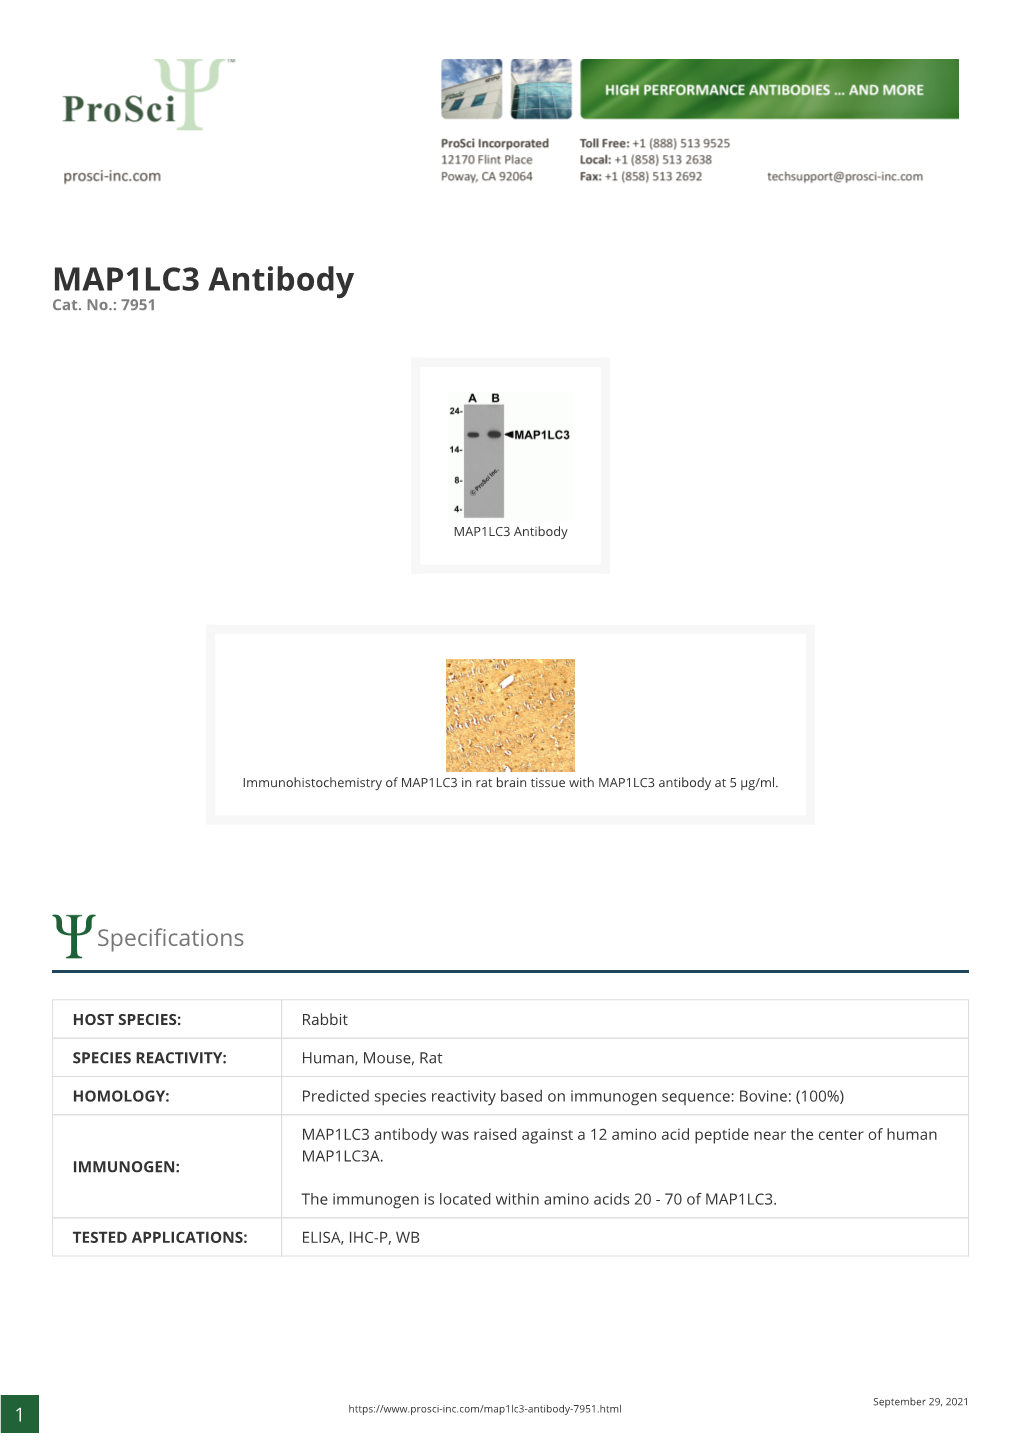 MAP1LC3 Antibody Cat